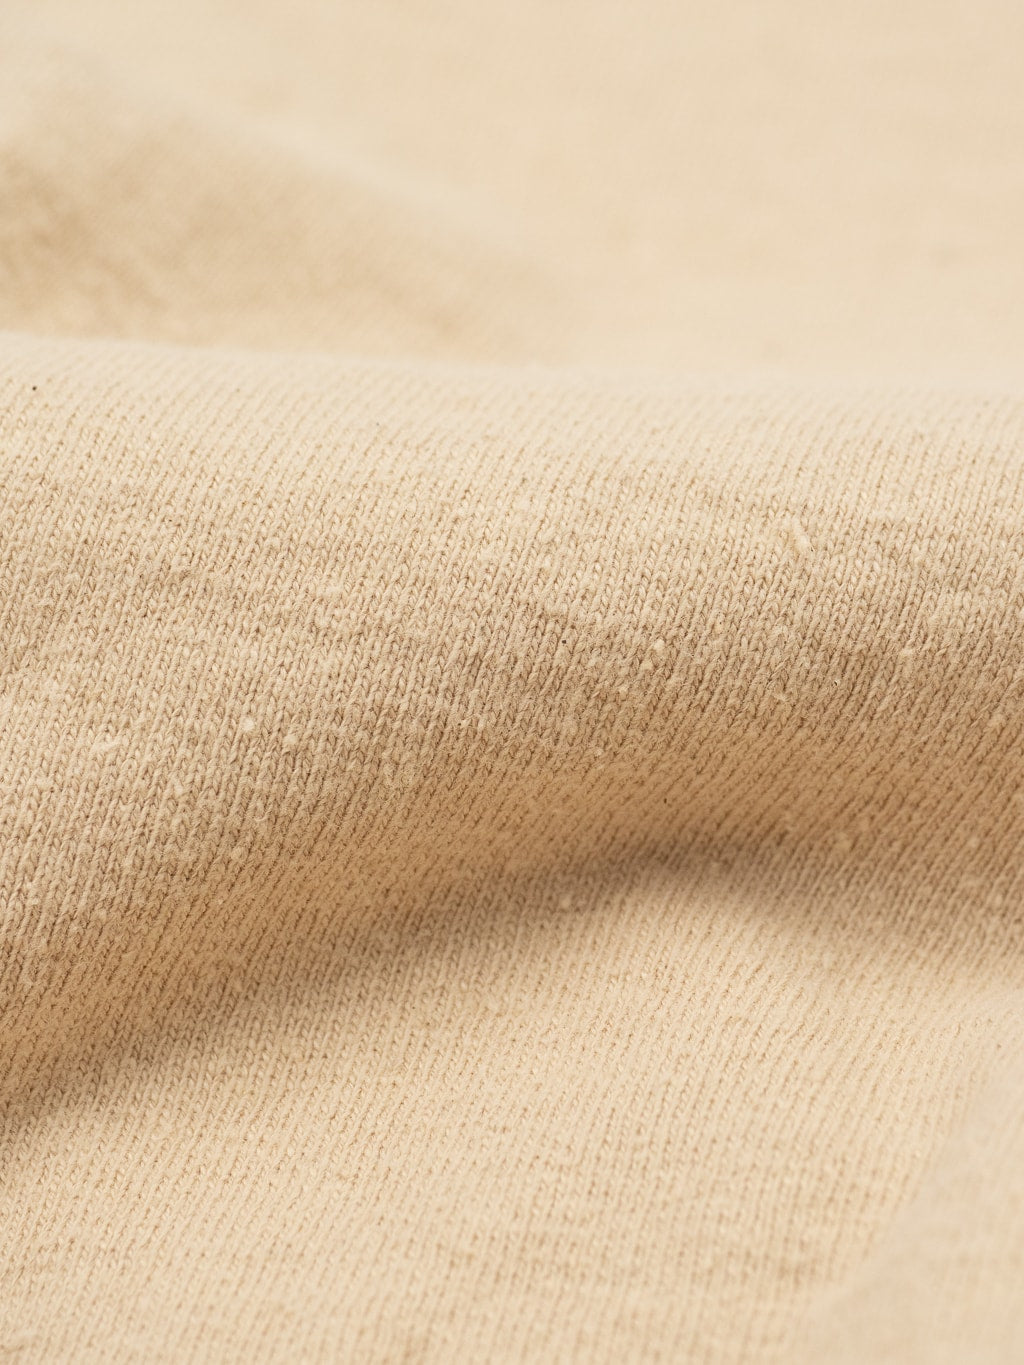 samurai jeans japanese cotton slub tshirt henley kuri texture